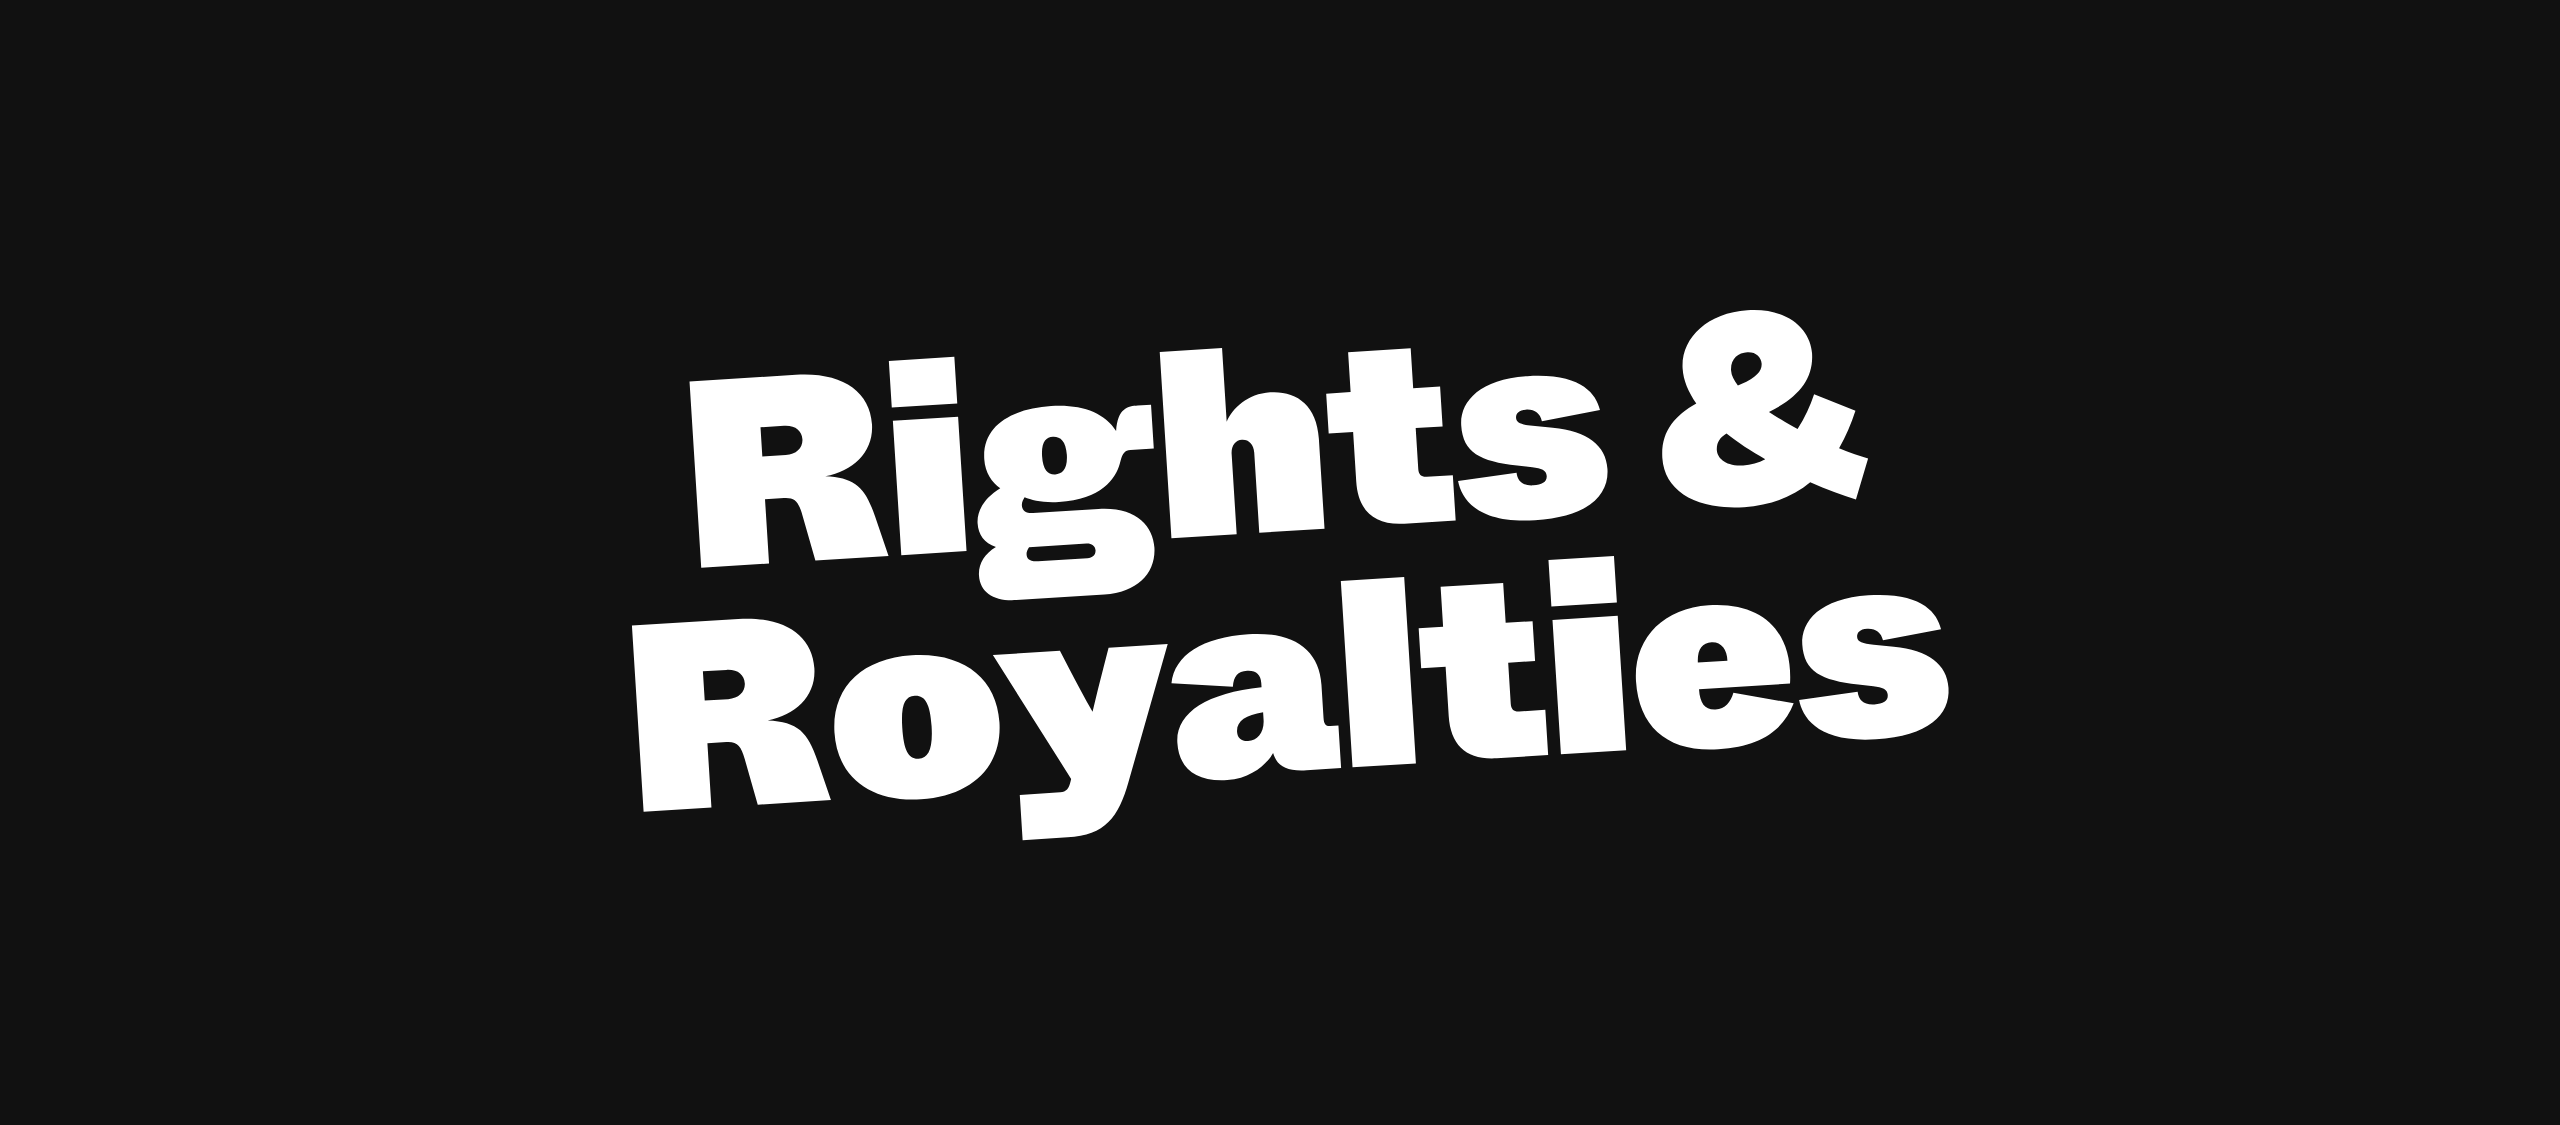 Rights & Royalties